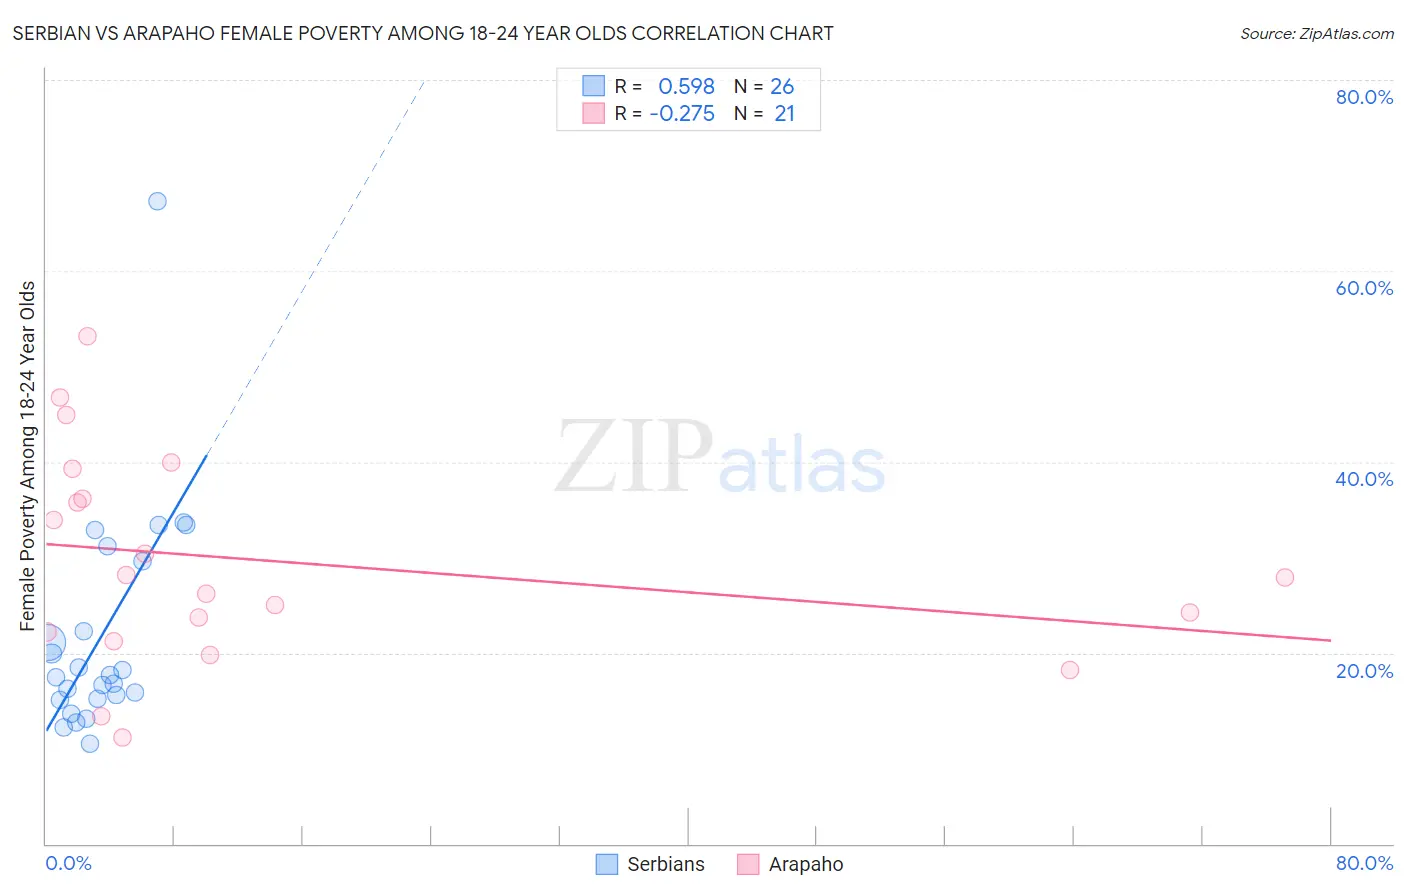 Serbian vs Arapaho Female Poverty Among 18-24 Year Olds